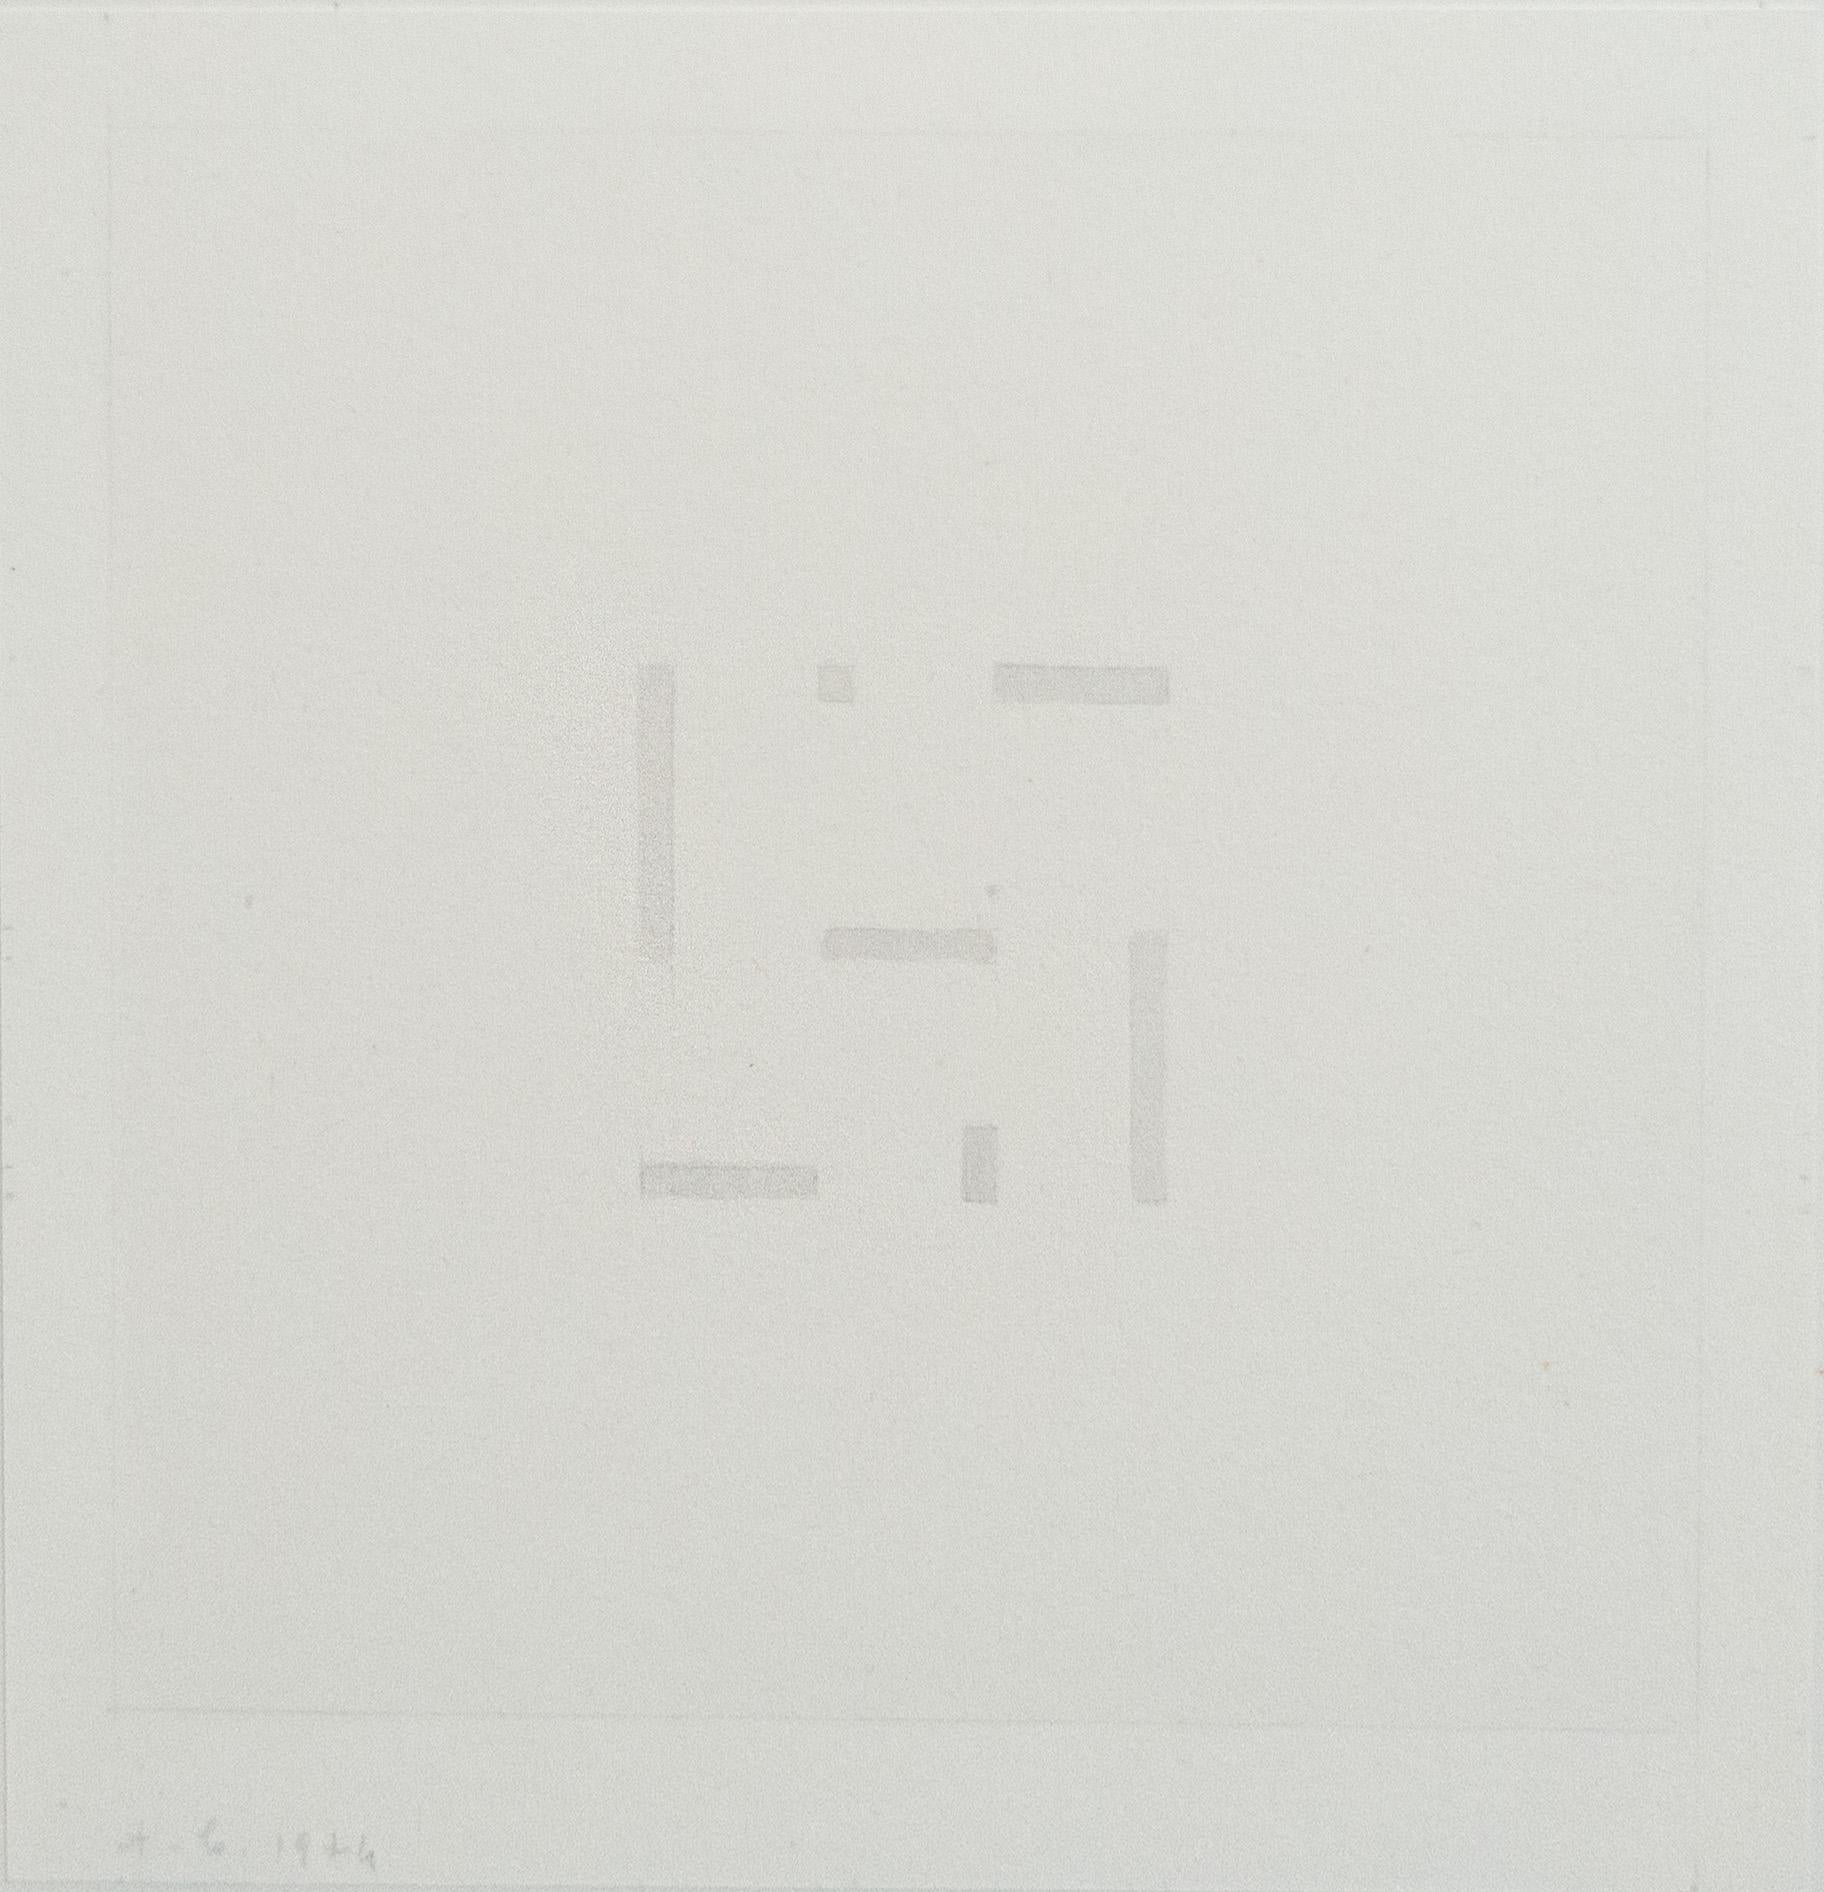 Antonio Calderara Abstract Drawing – Graue Konstellation A, Abstraktion, italienische Kunst, Minimalismus 1974